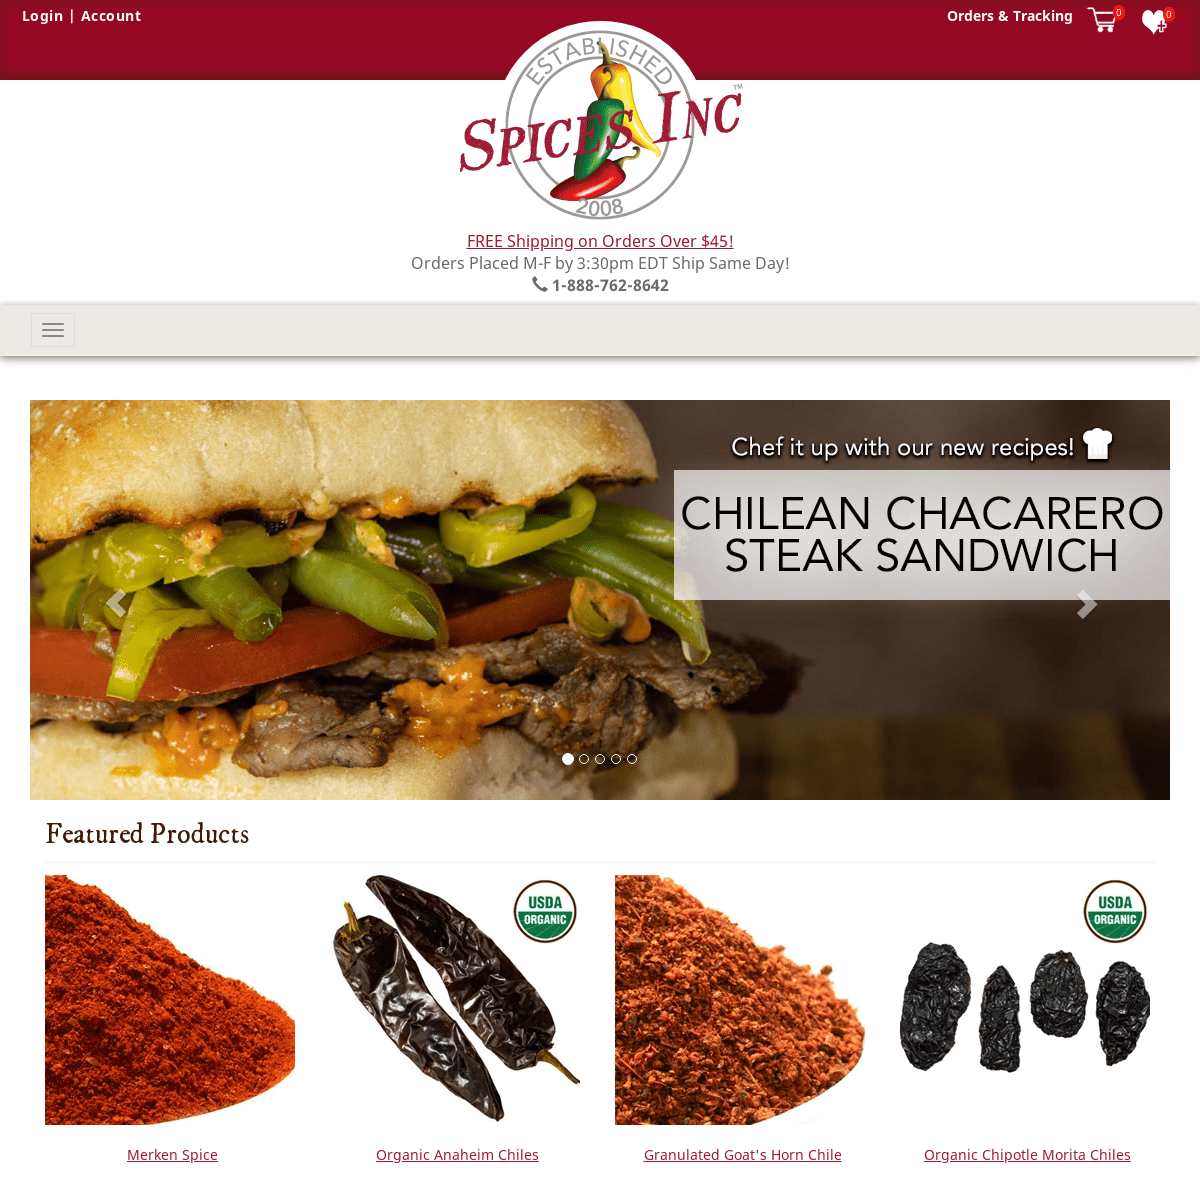 Buy Bulk Spices Online | SpicesInc.com The Online Spice Store